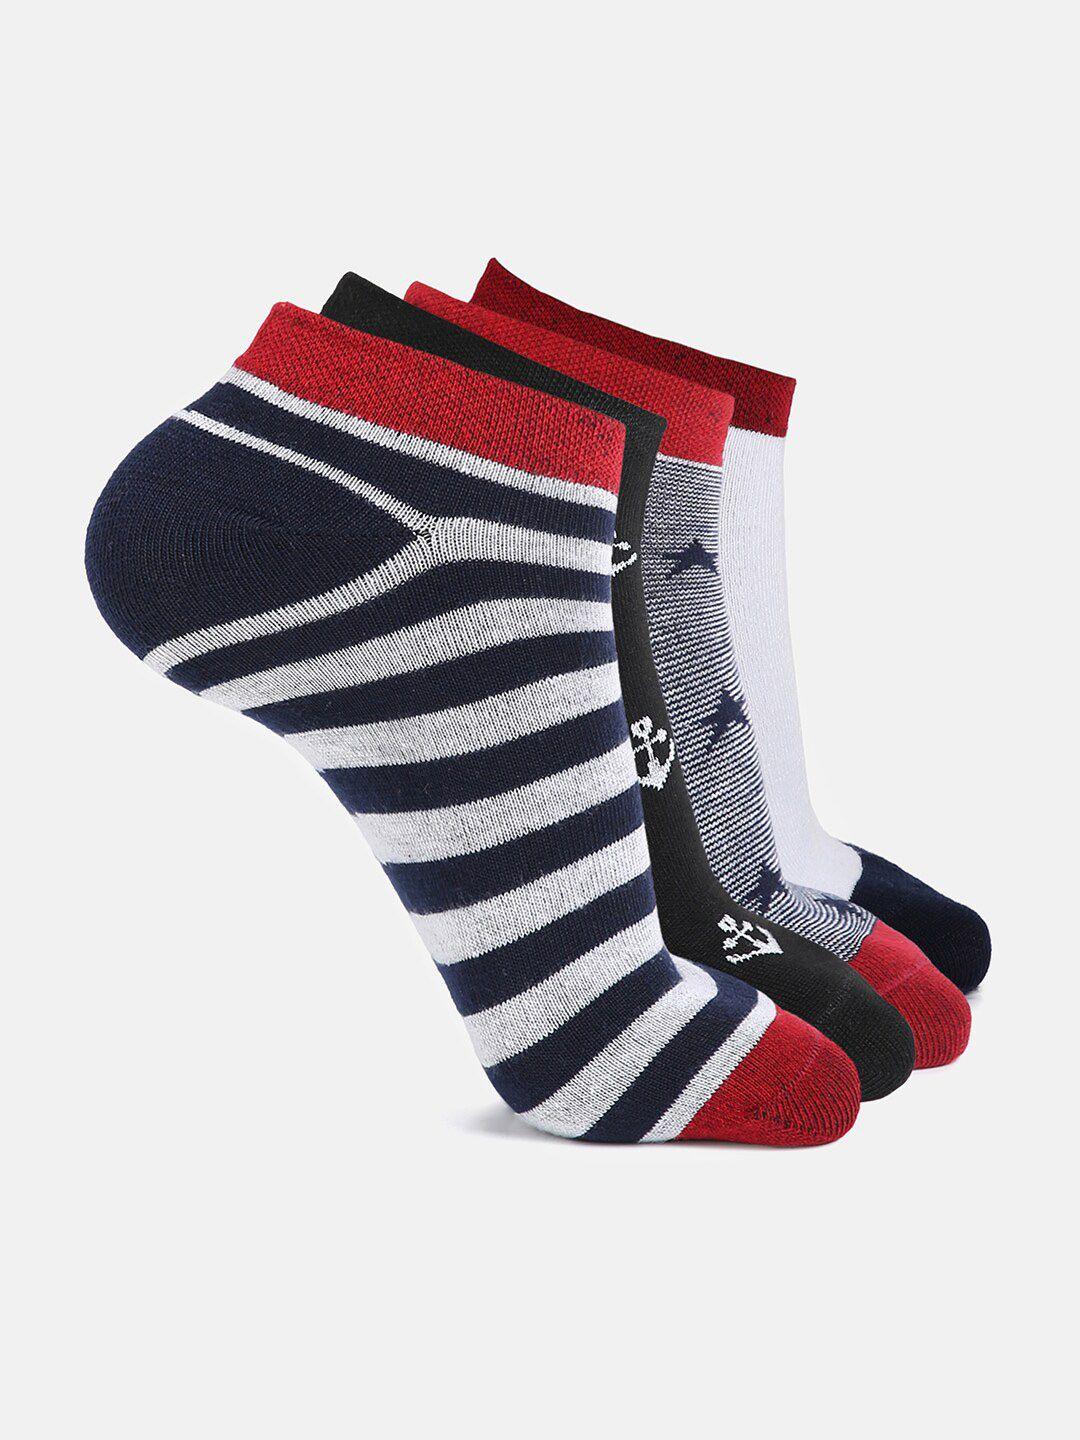 baesd kids pack of 4 patterned cotton ankle length socks